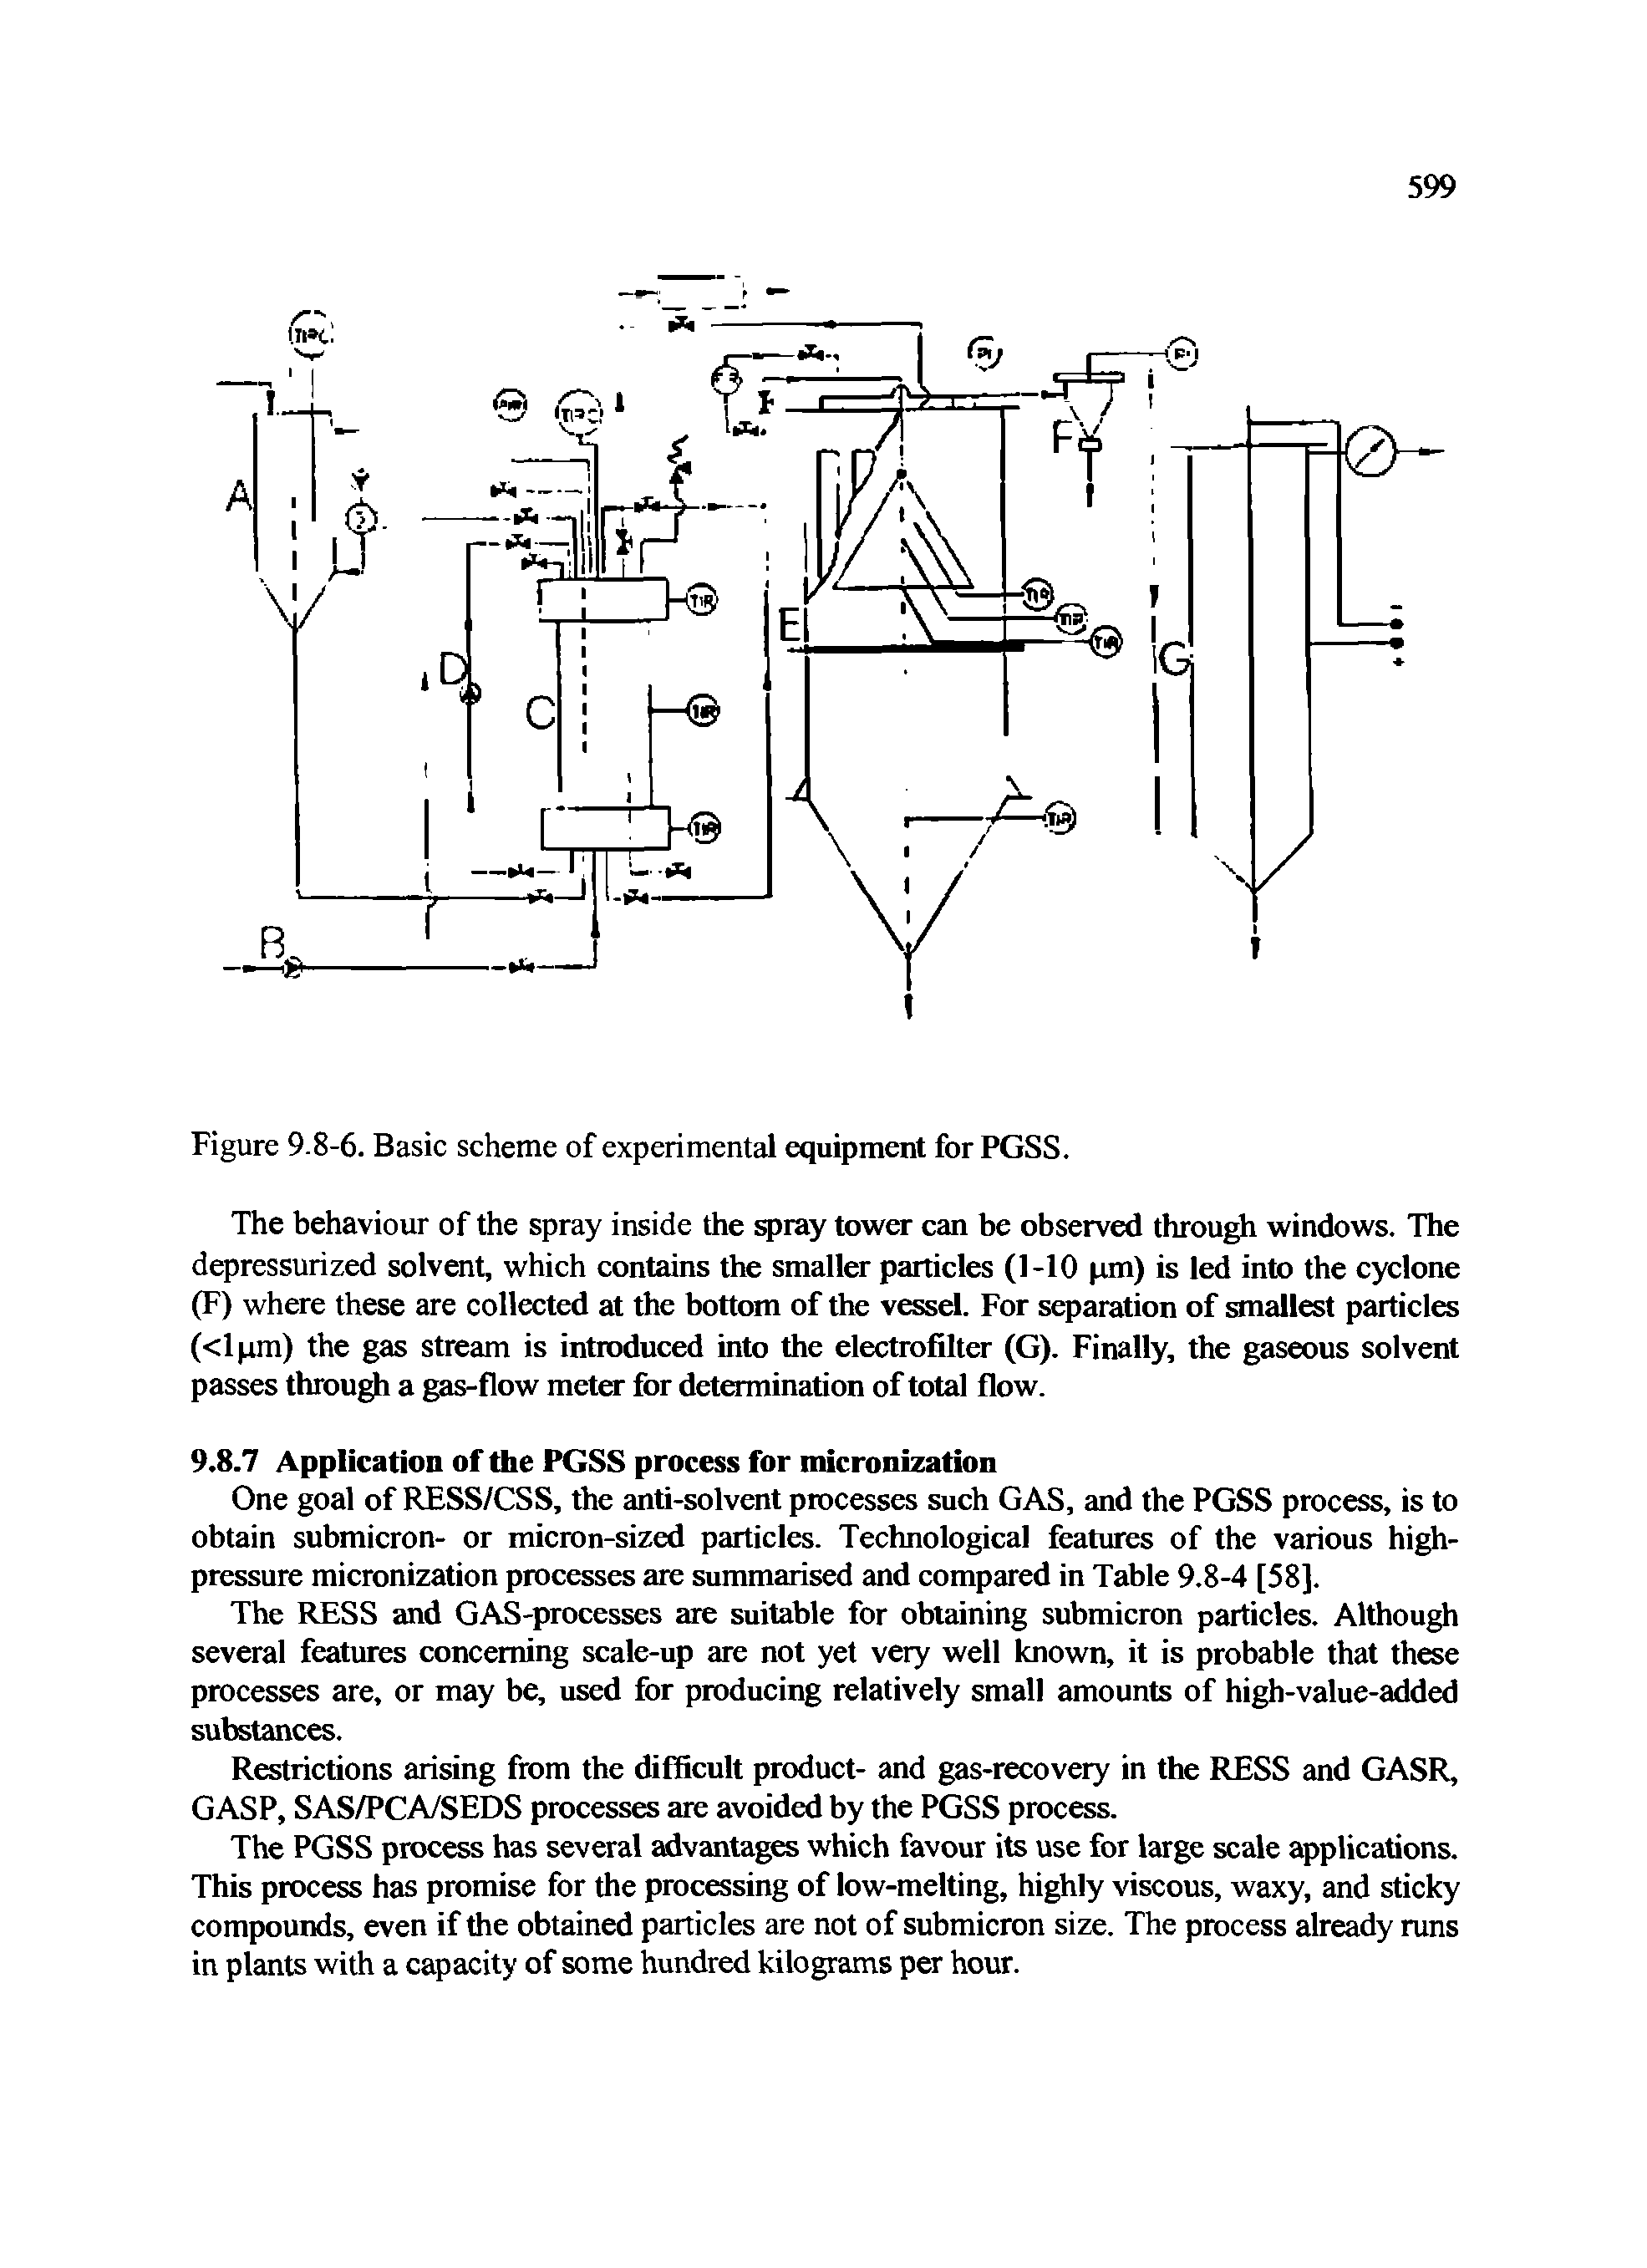 Figure 9.8-6. Basic scheme of experimental equipment for PGSS.